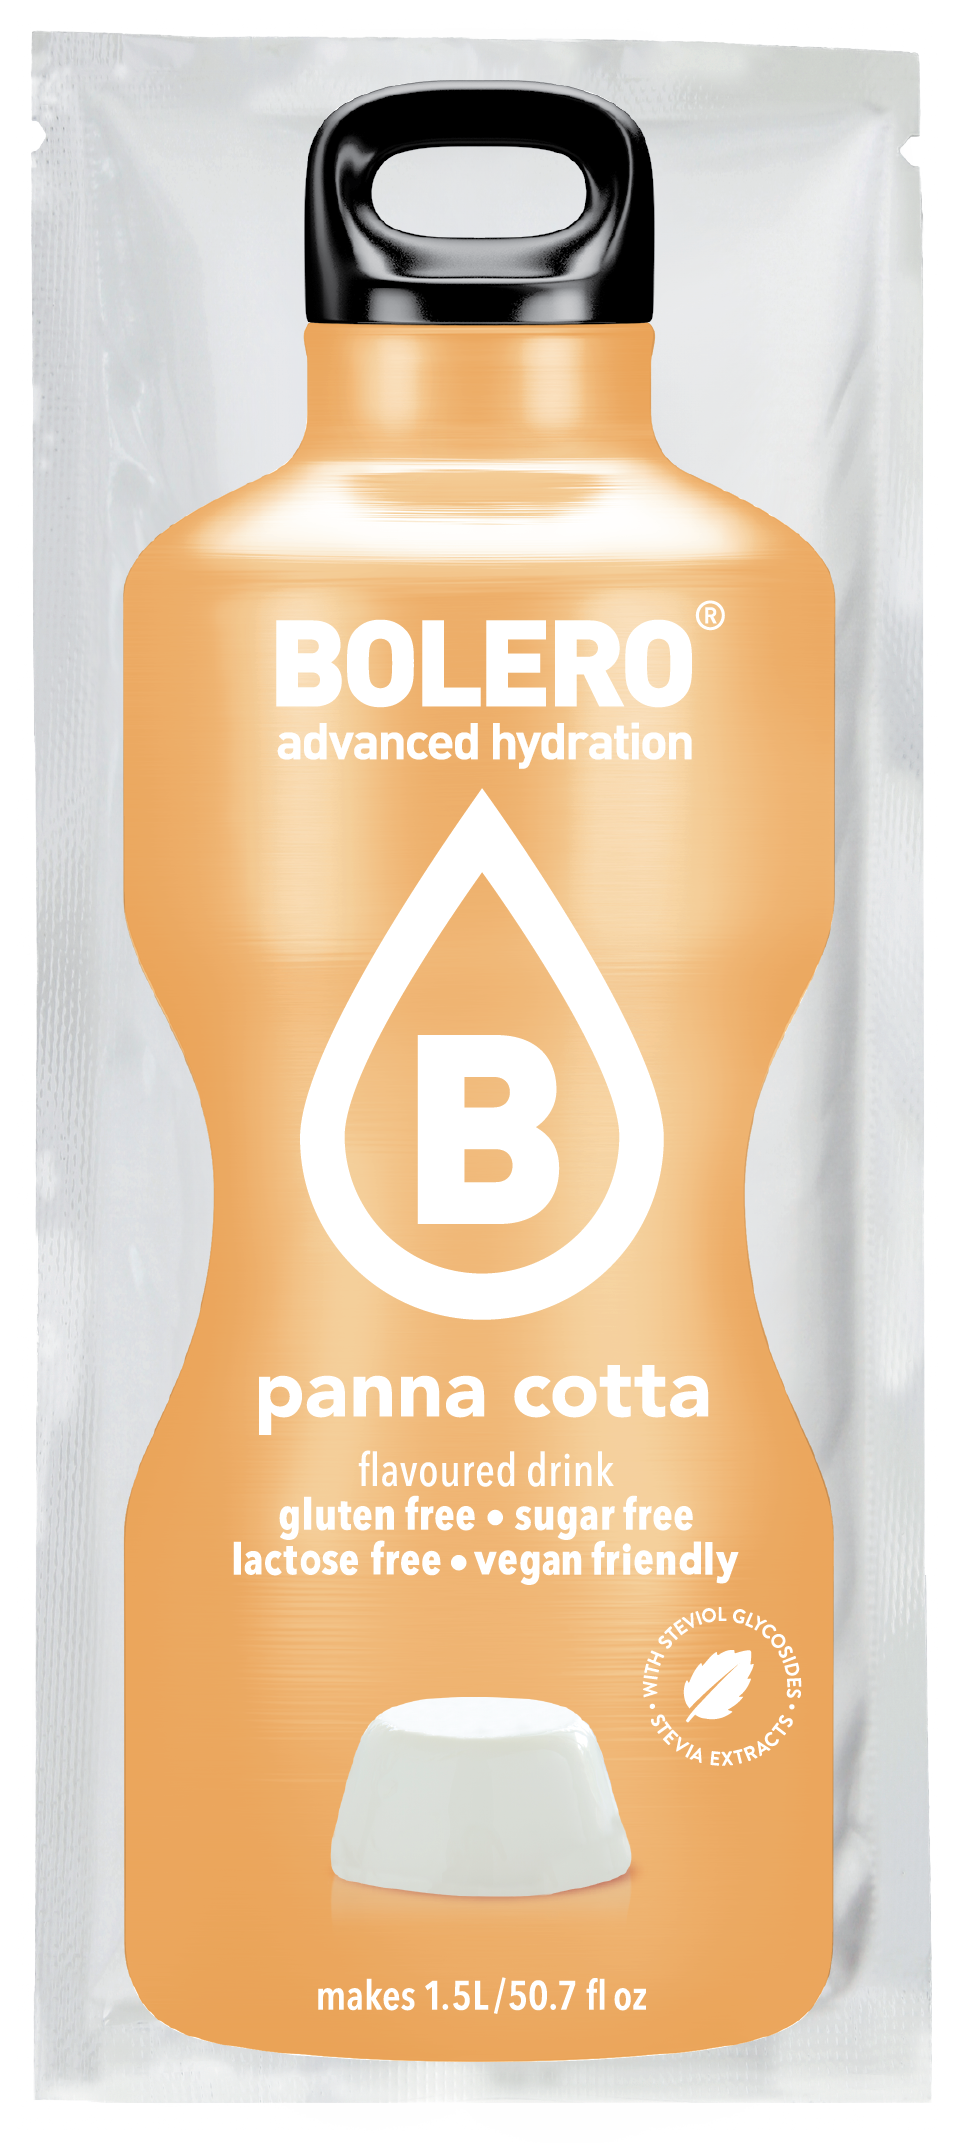 Bolero Advanced Hydration - Panna Cotta - Box of 12 Sachets - SALE PRODUCT - Exp 12-17-23